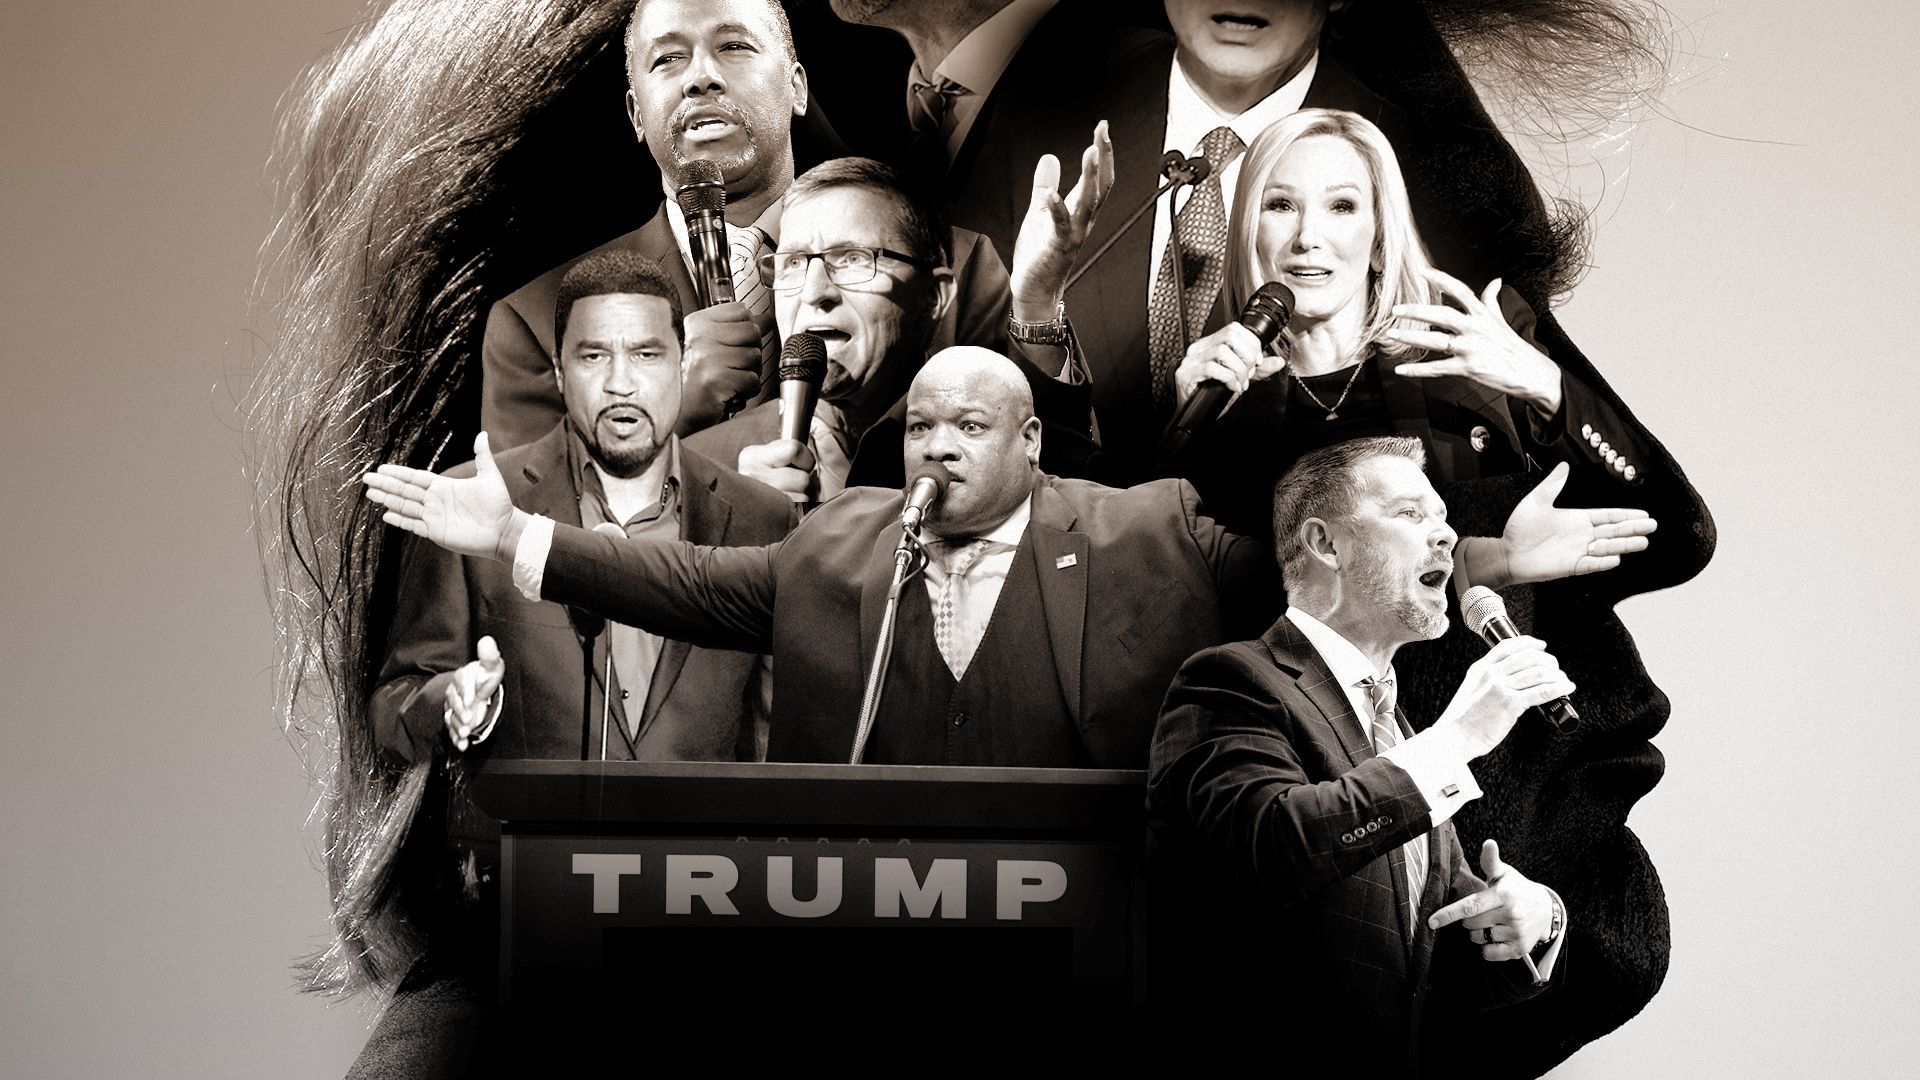 Photo Illustration of Ben Carson, Darrell Scott, Michael Flynn, Paula White-Caine, Mark Burns and Greg Locke within the silhouette of Donald Trump